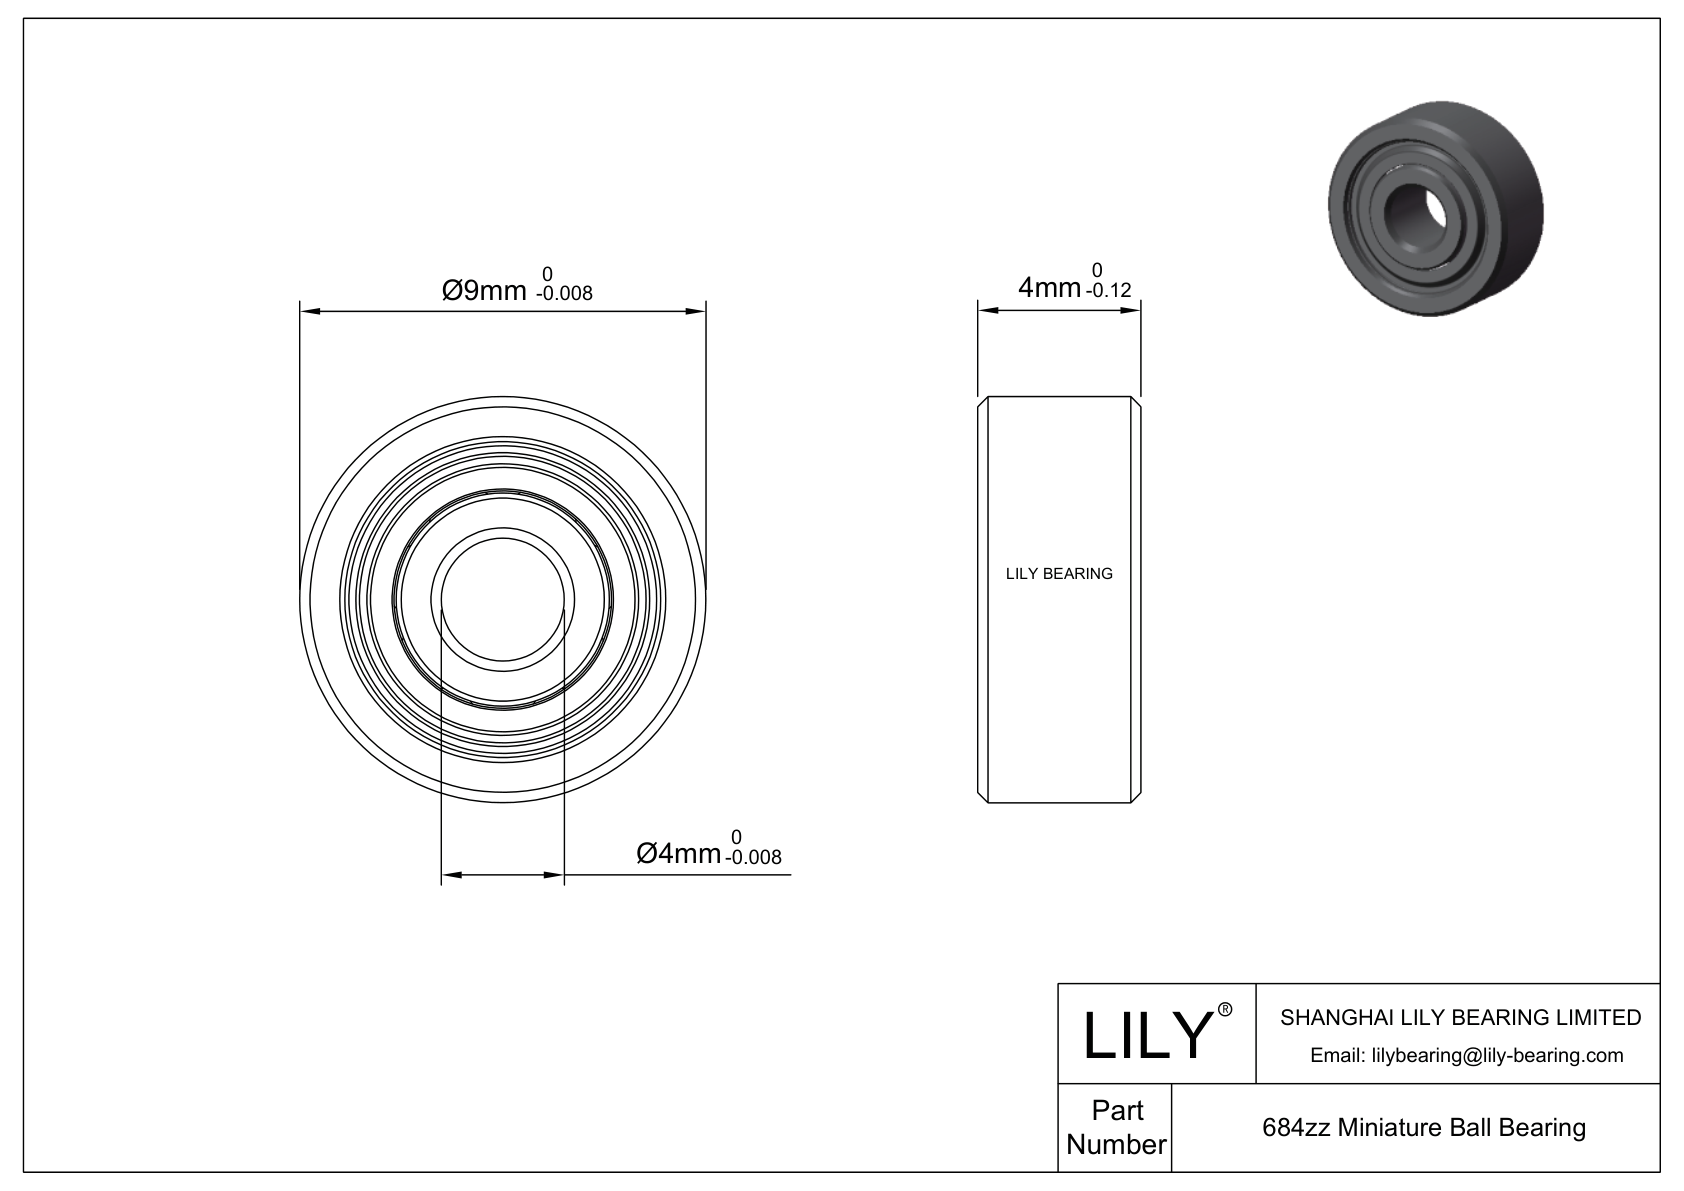 LILY-PU68411-4 Polyurethane Coated Bearing cad drawing